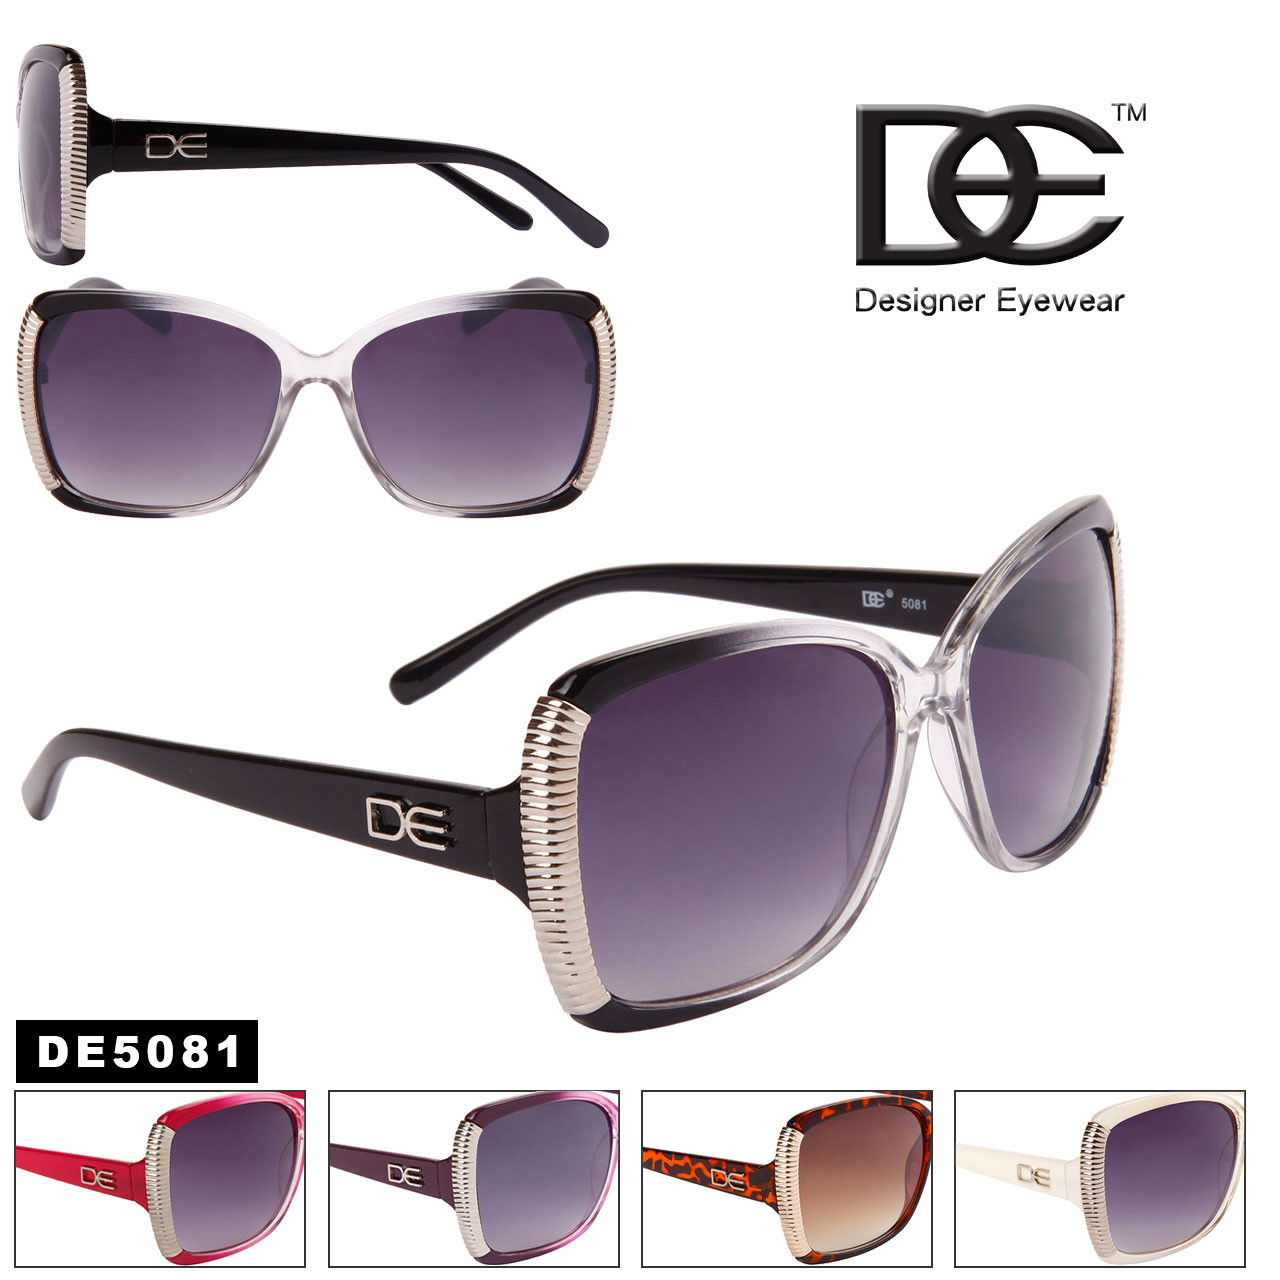 DE™ Designer Eyewear Bulk Fashion Sunglasses - Style #DE5081